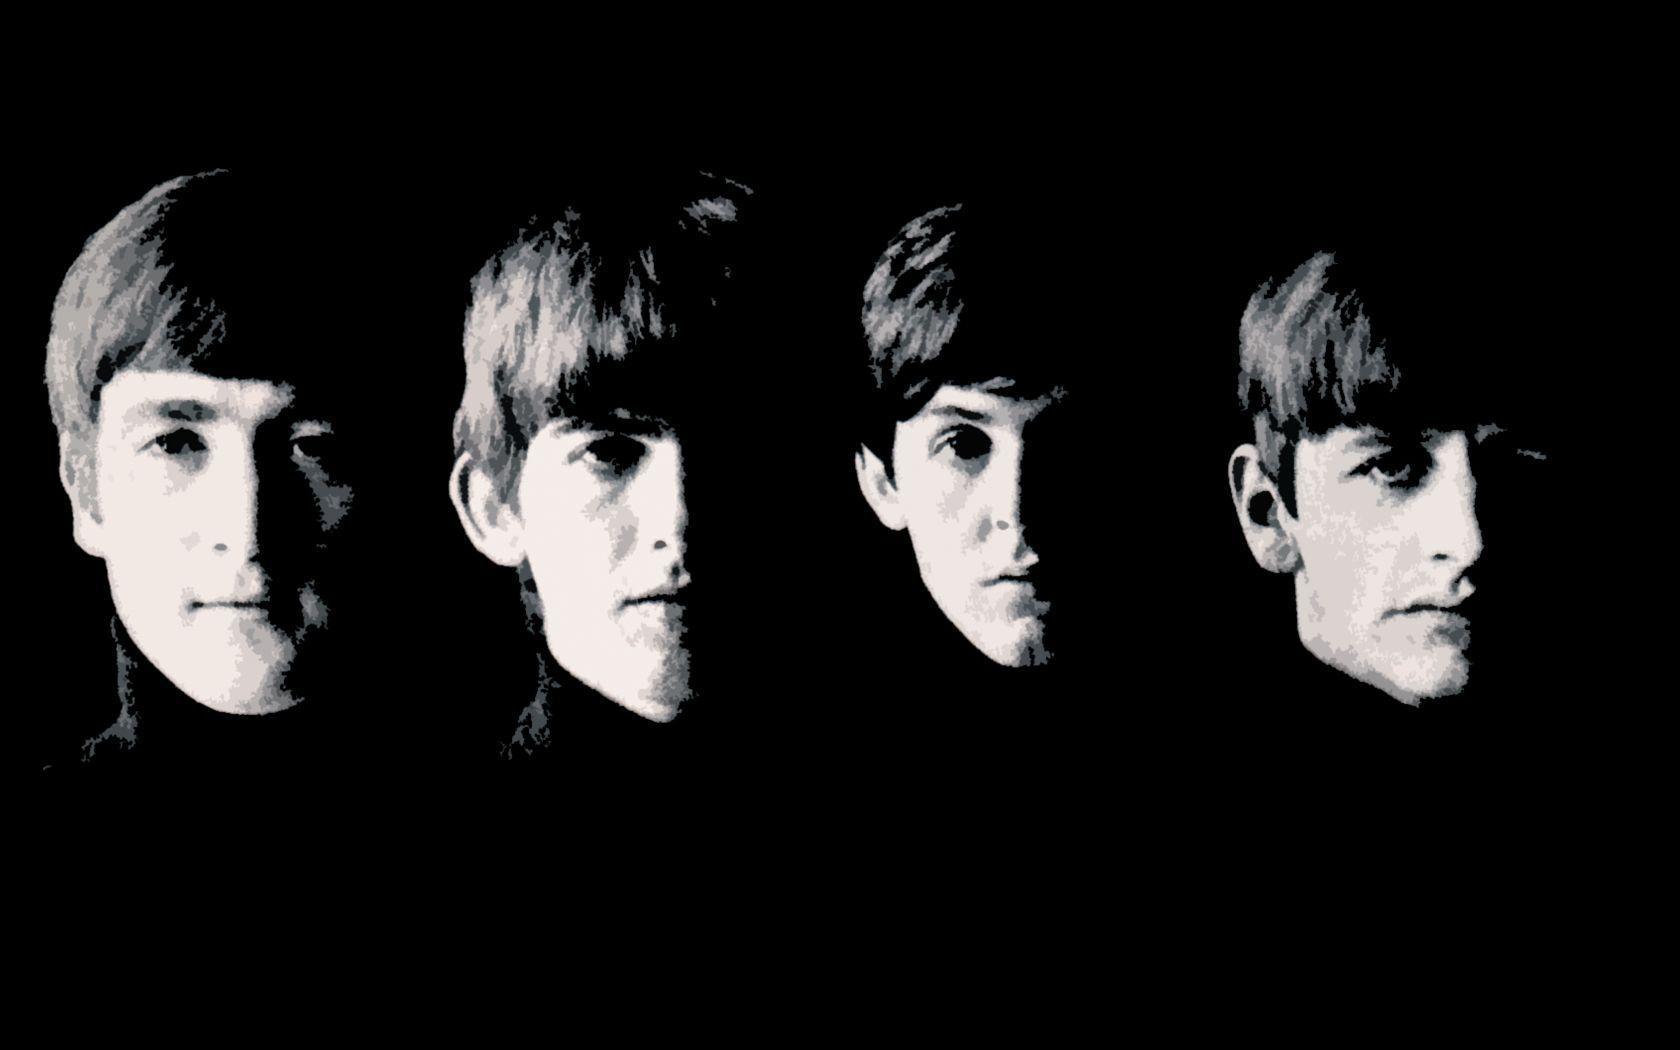 Wallpaper For > The Beatles Wallpaper Black And White